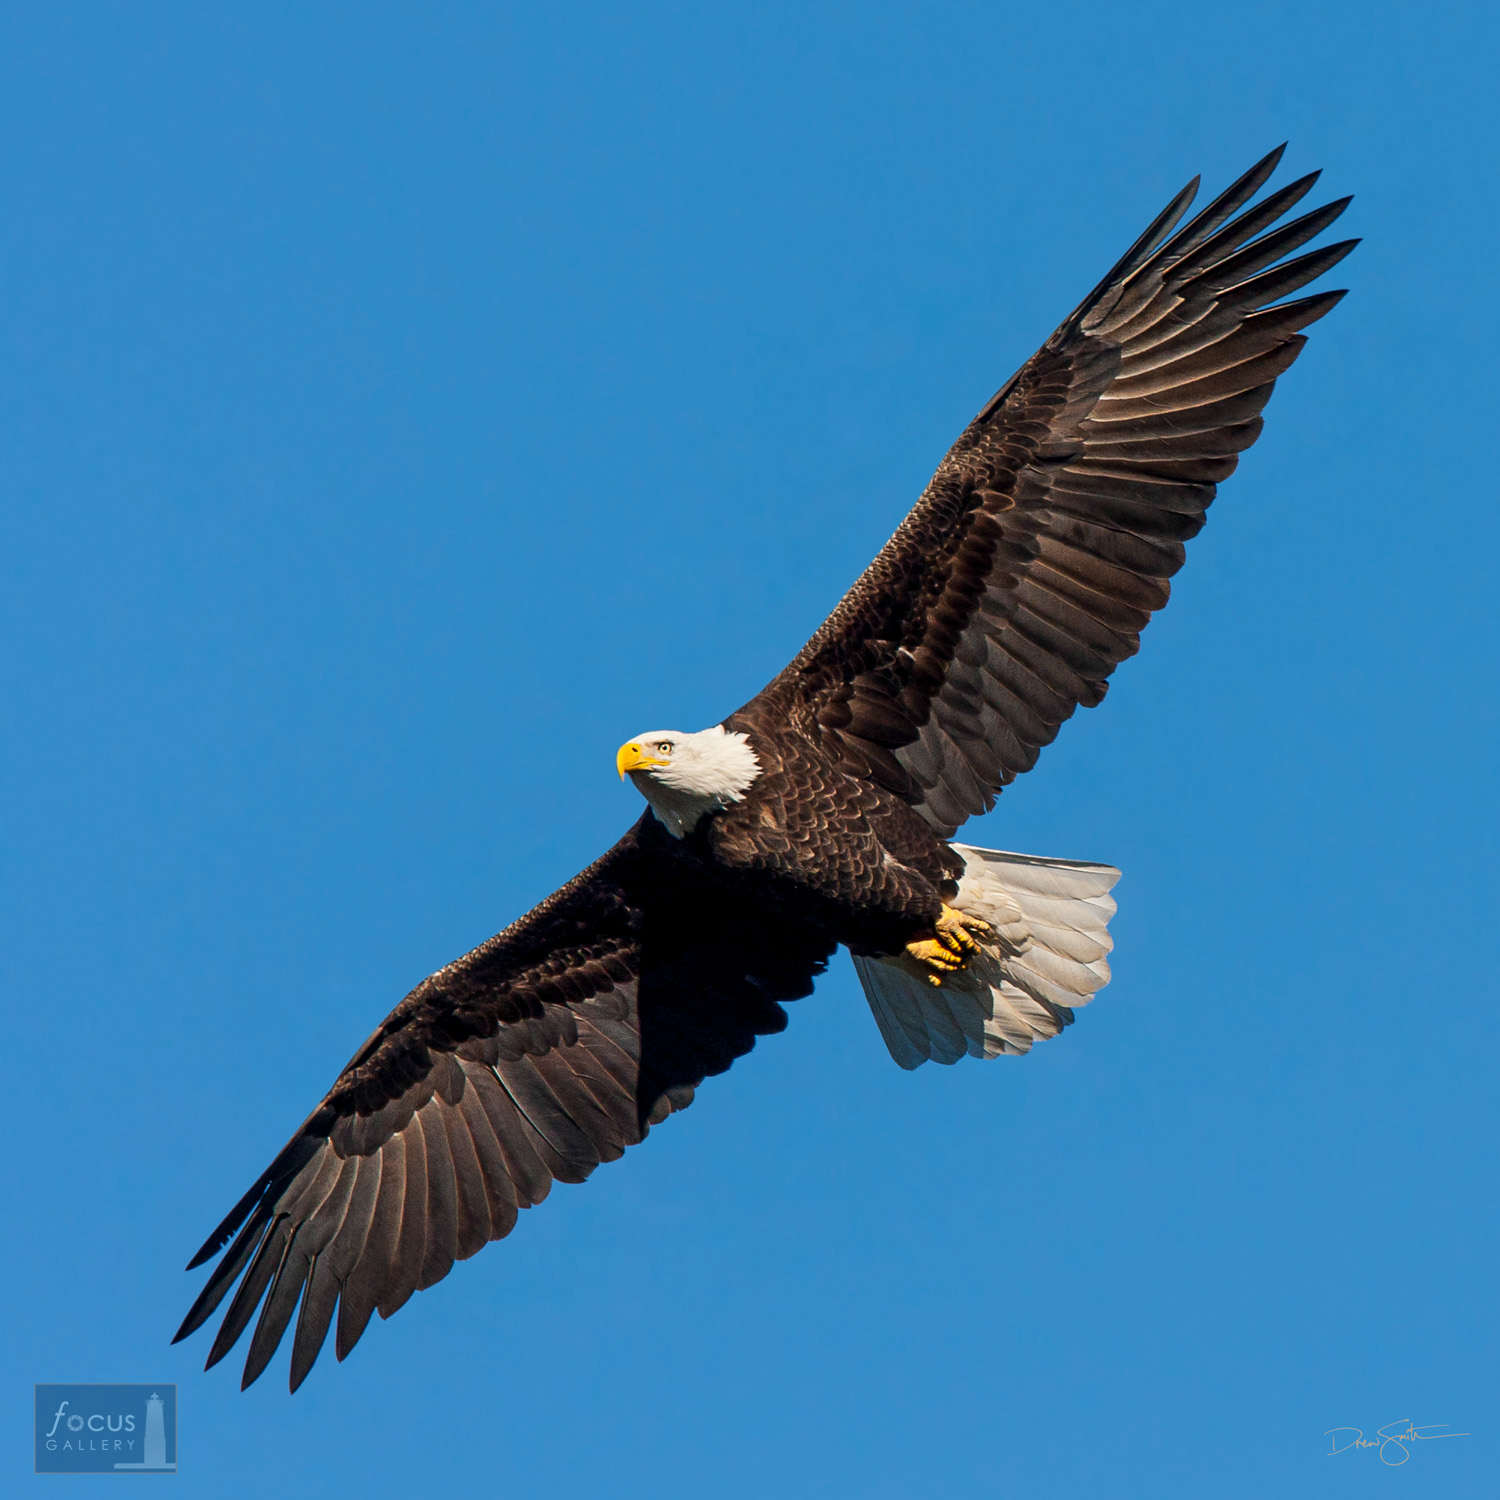 A bald eagle in flight in a blue sky.